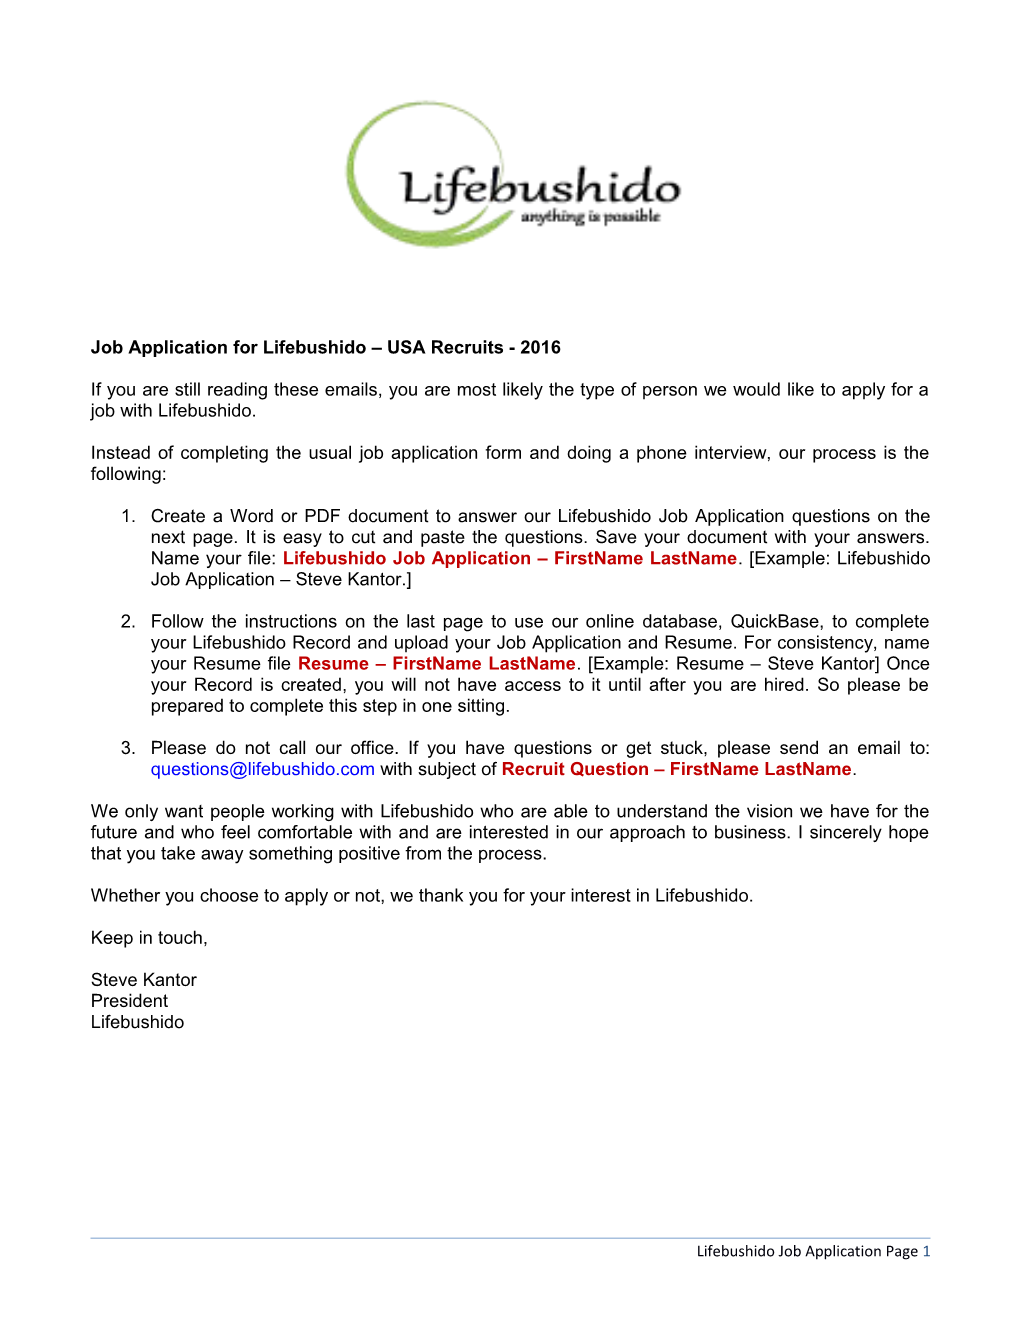 Job Application for Lifebushido USA Recruits - 2016